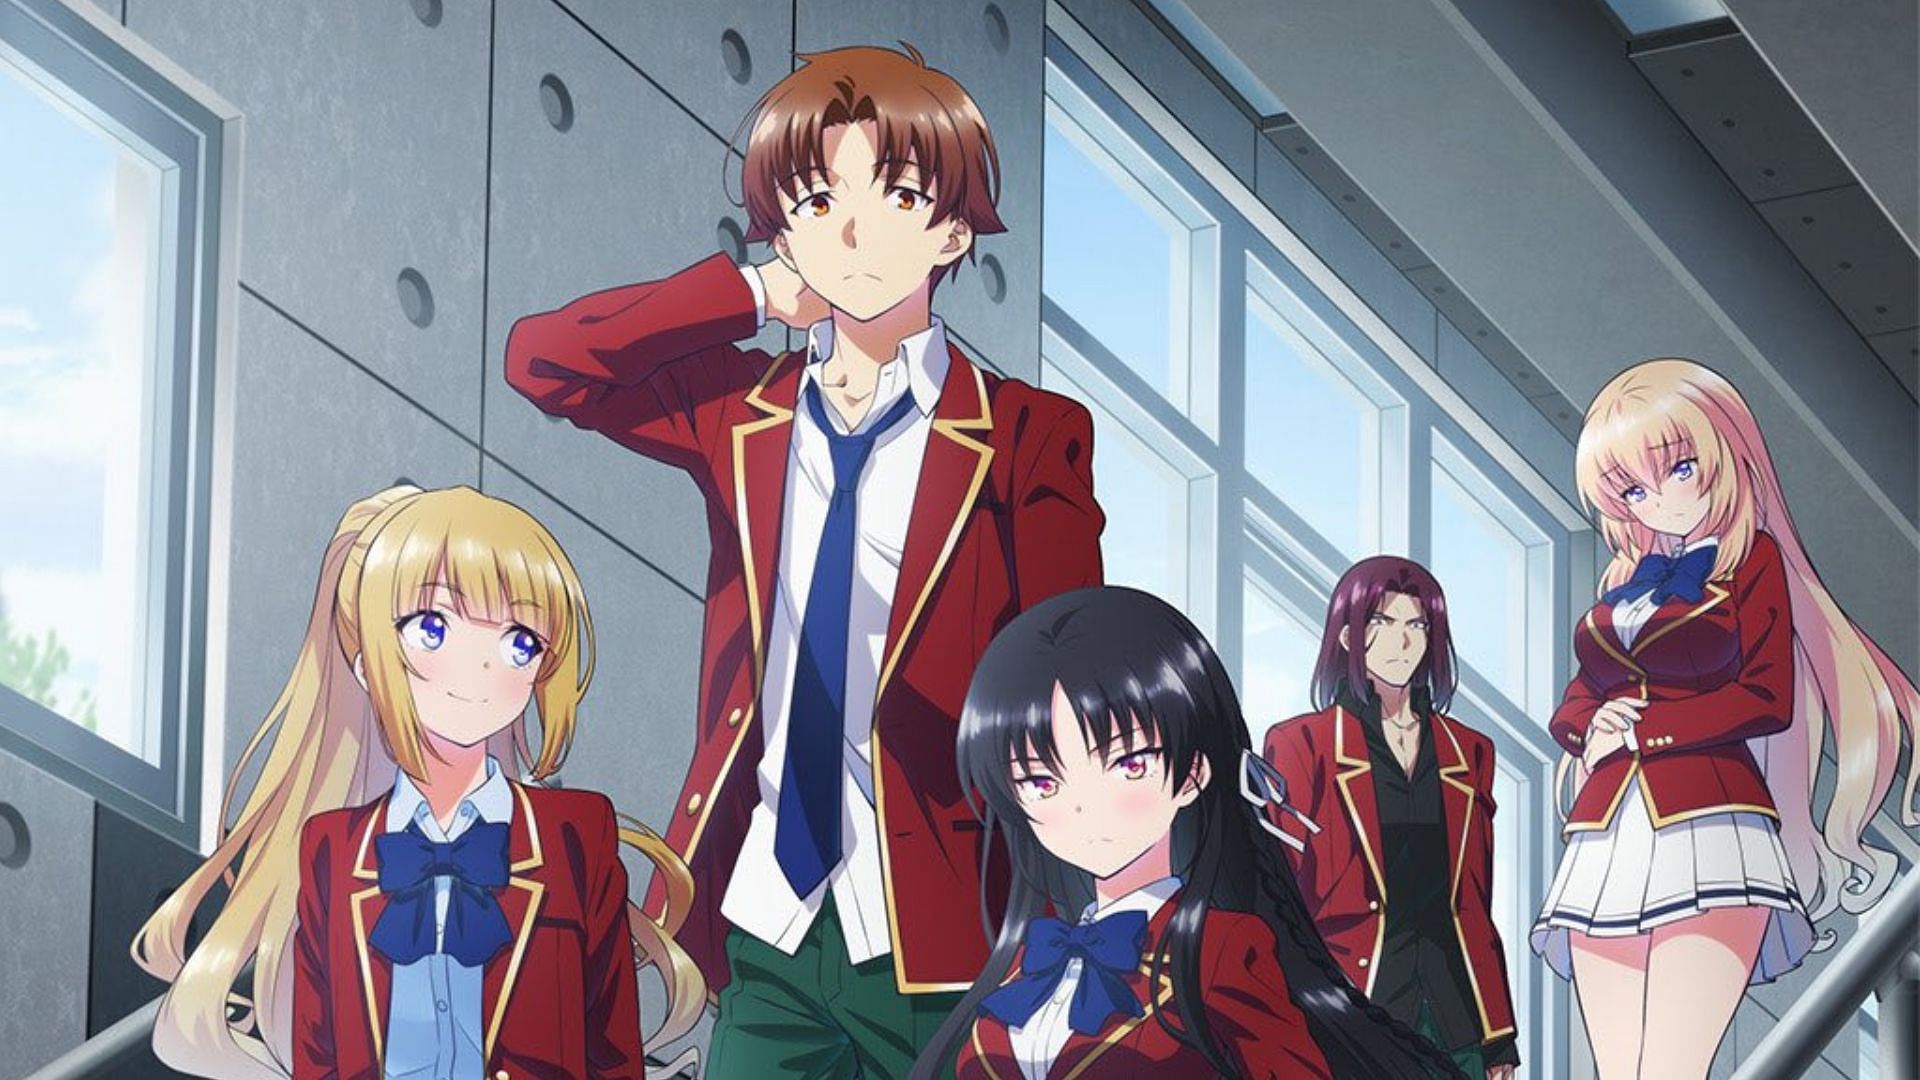 Primary cast of the Classroom of the Elite anime (Image via Studio Lerche)